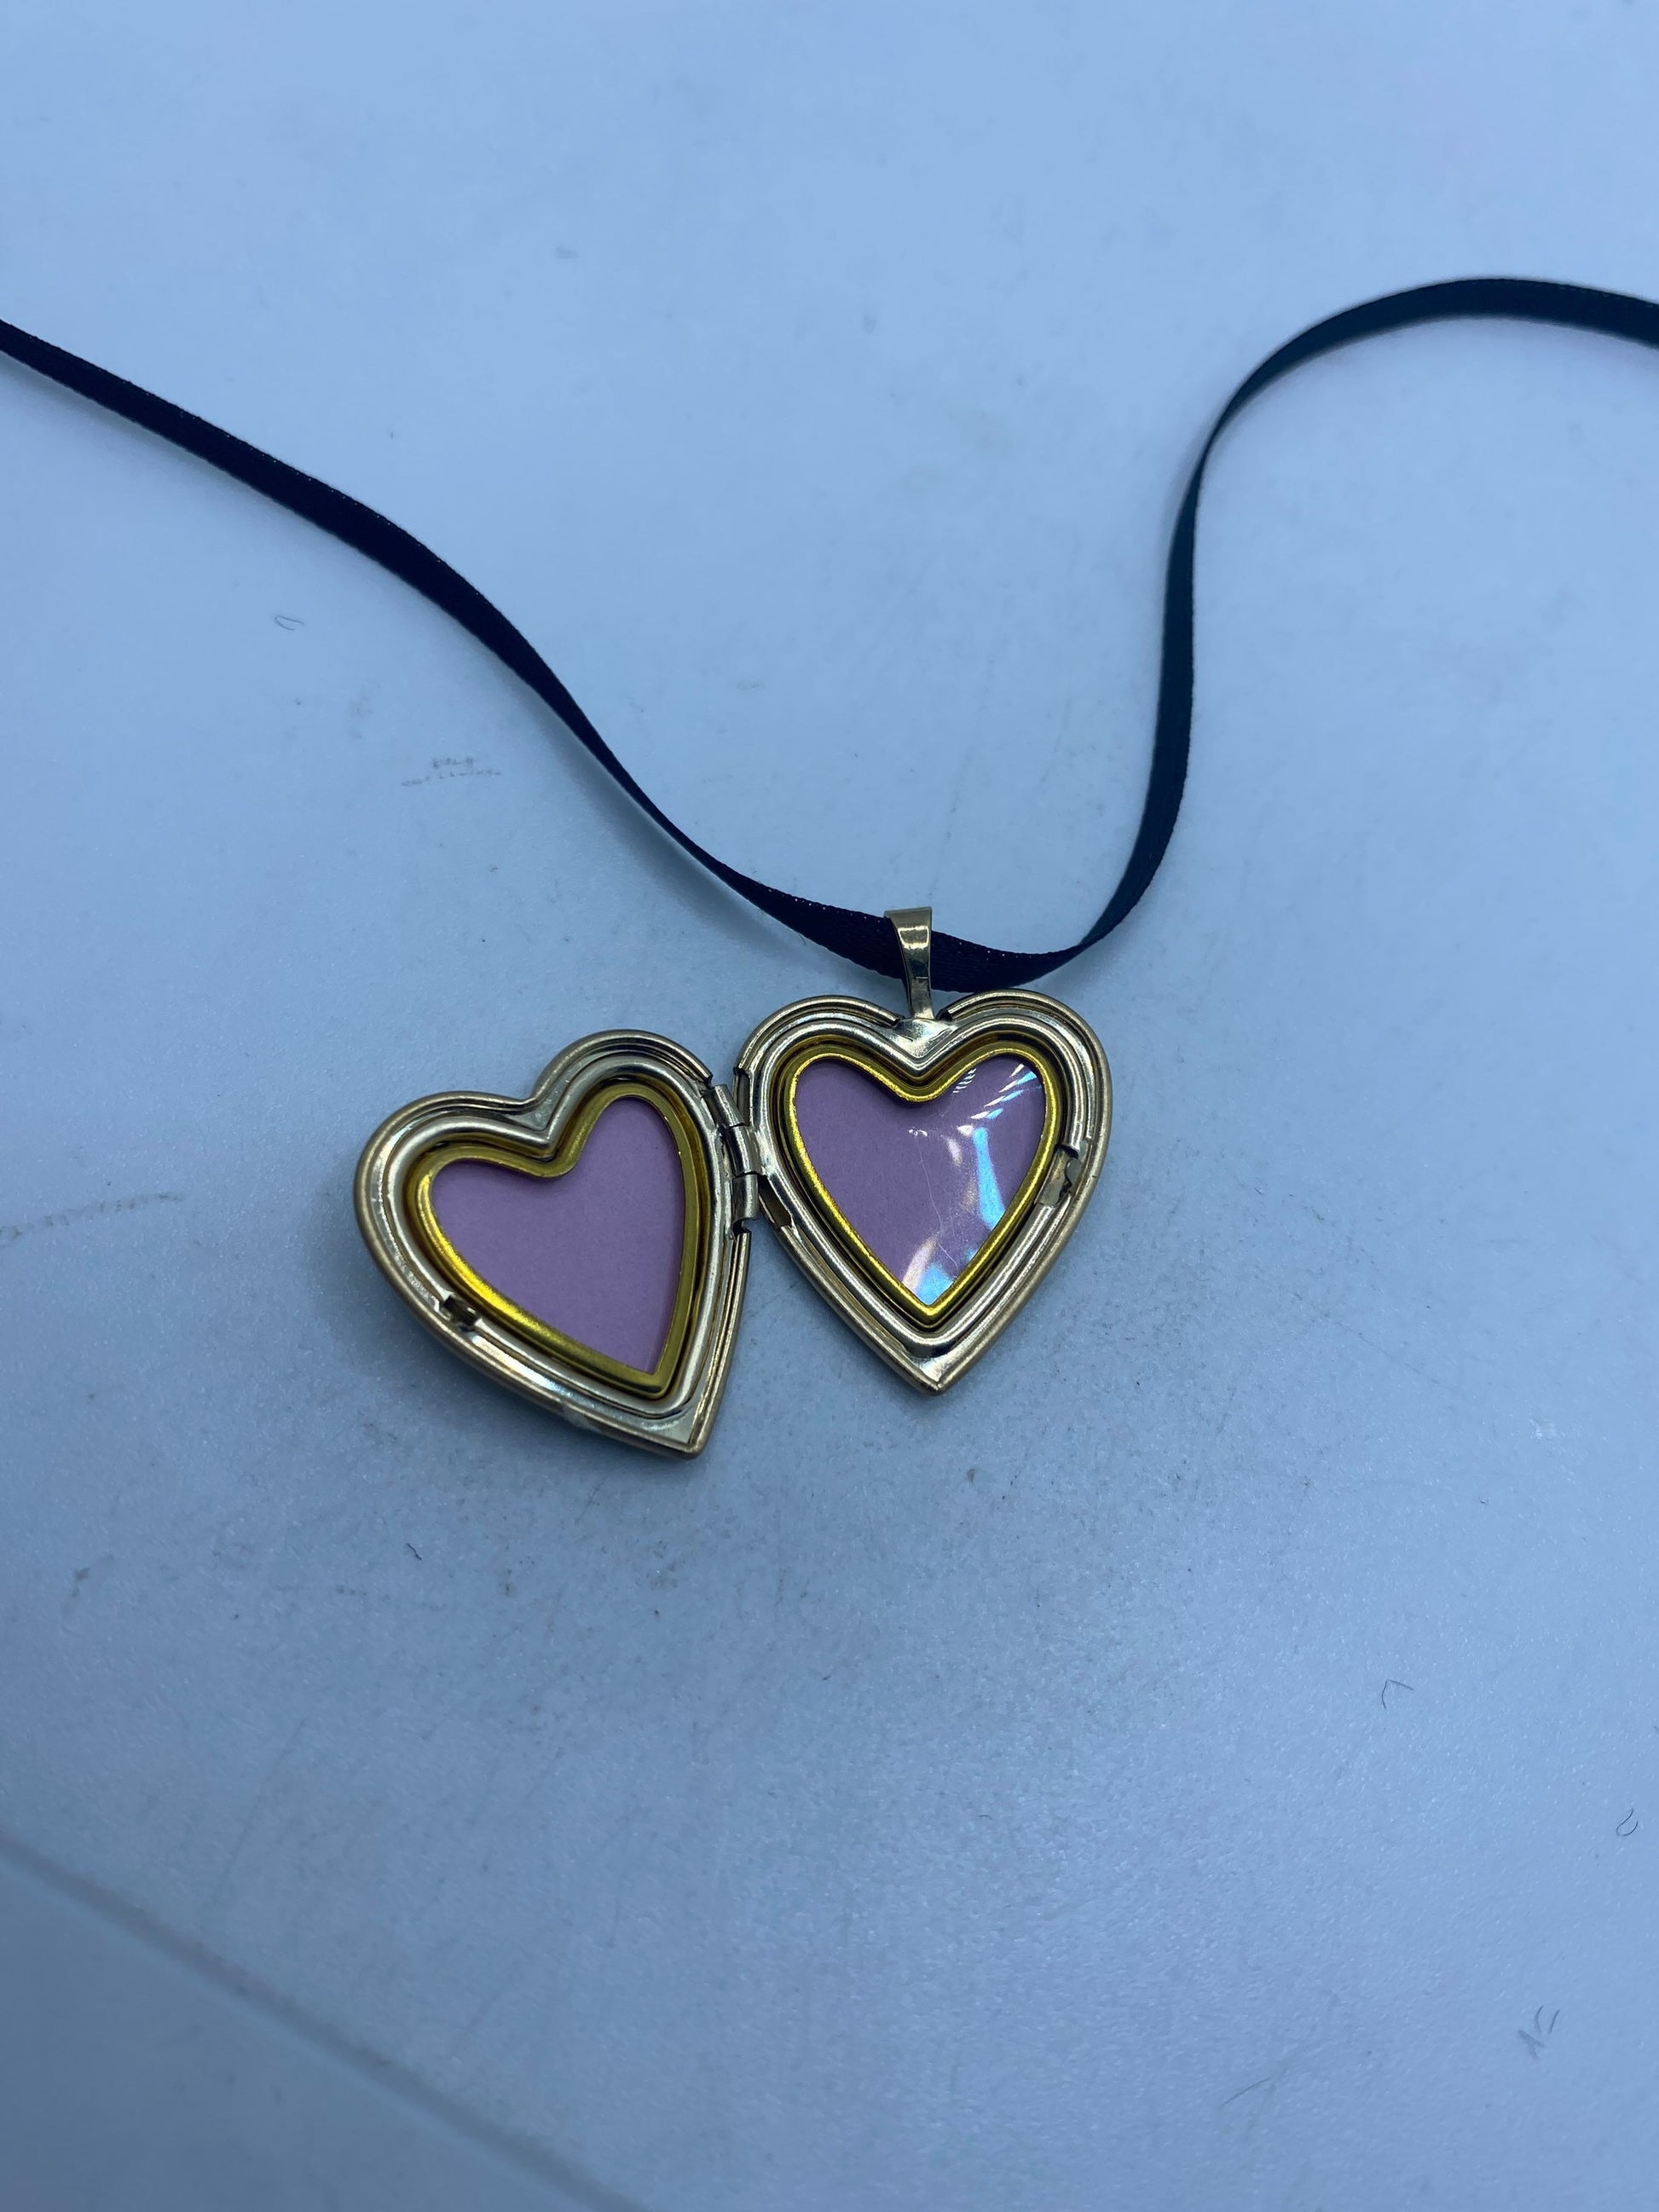 Vintage Gold Locket | Tiny Heart 9k Gold Filled Pendant Photo Memory Charm Engraved Flowers | Choker Necklace